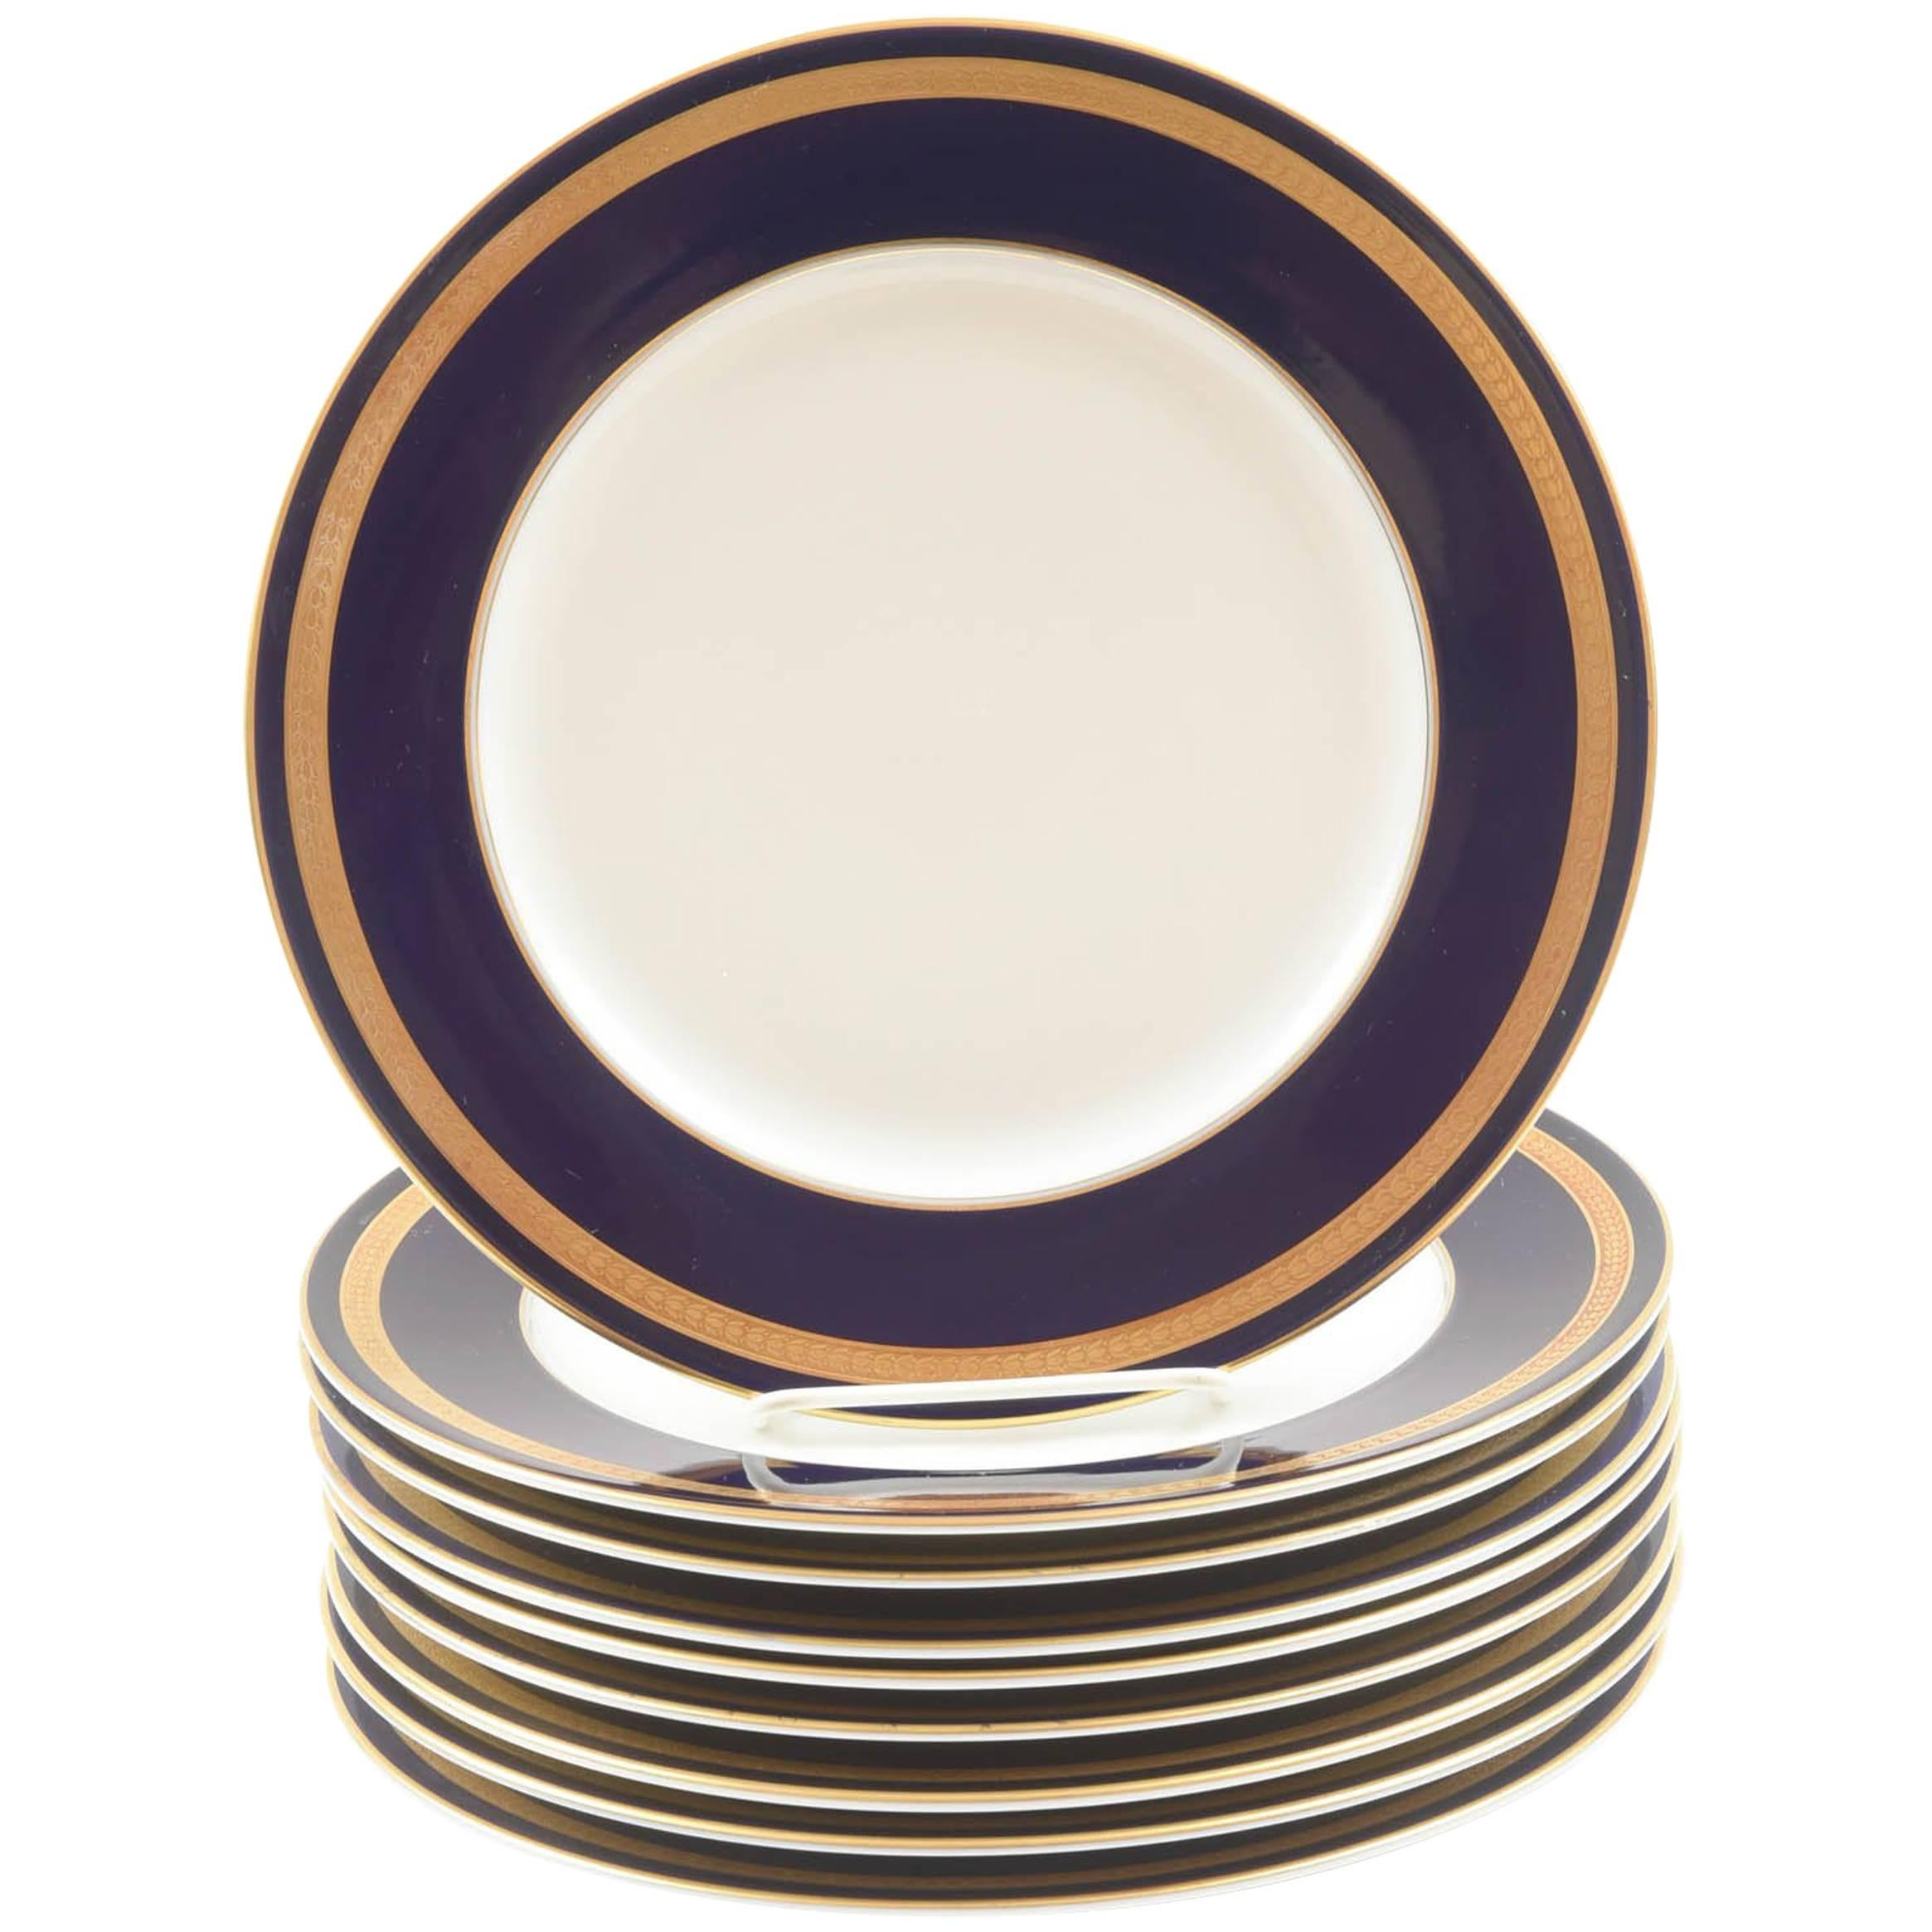 Eight Dinner Plates, "Eminence Cobalt" by Rosenthal